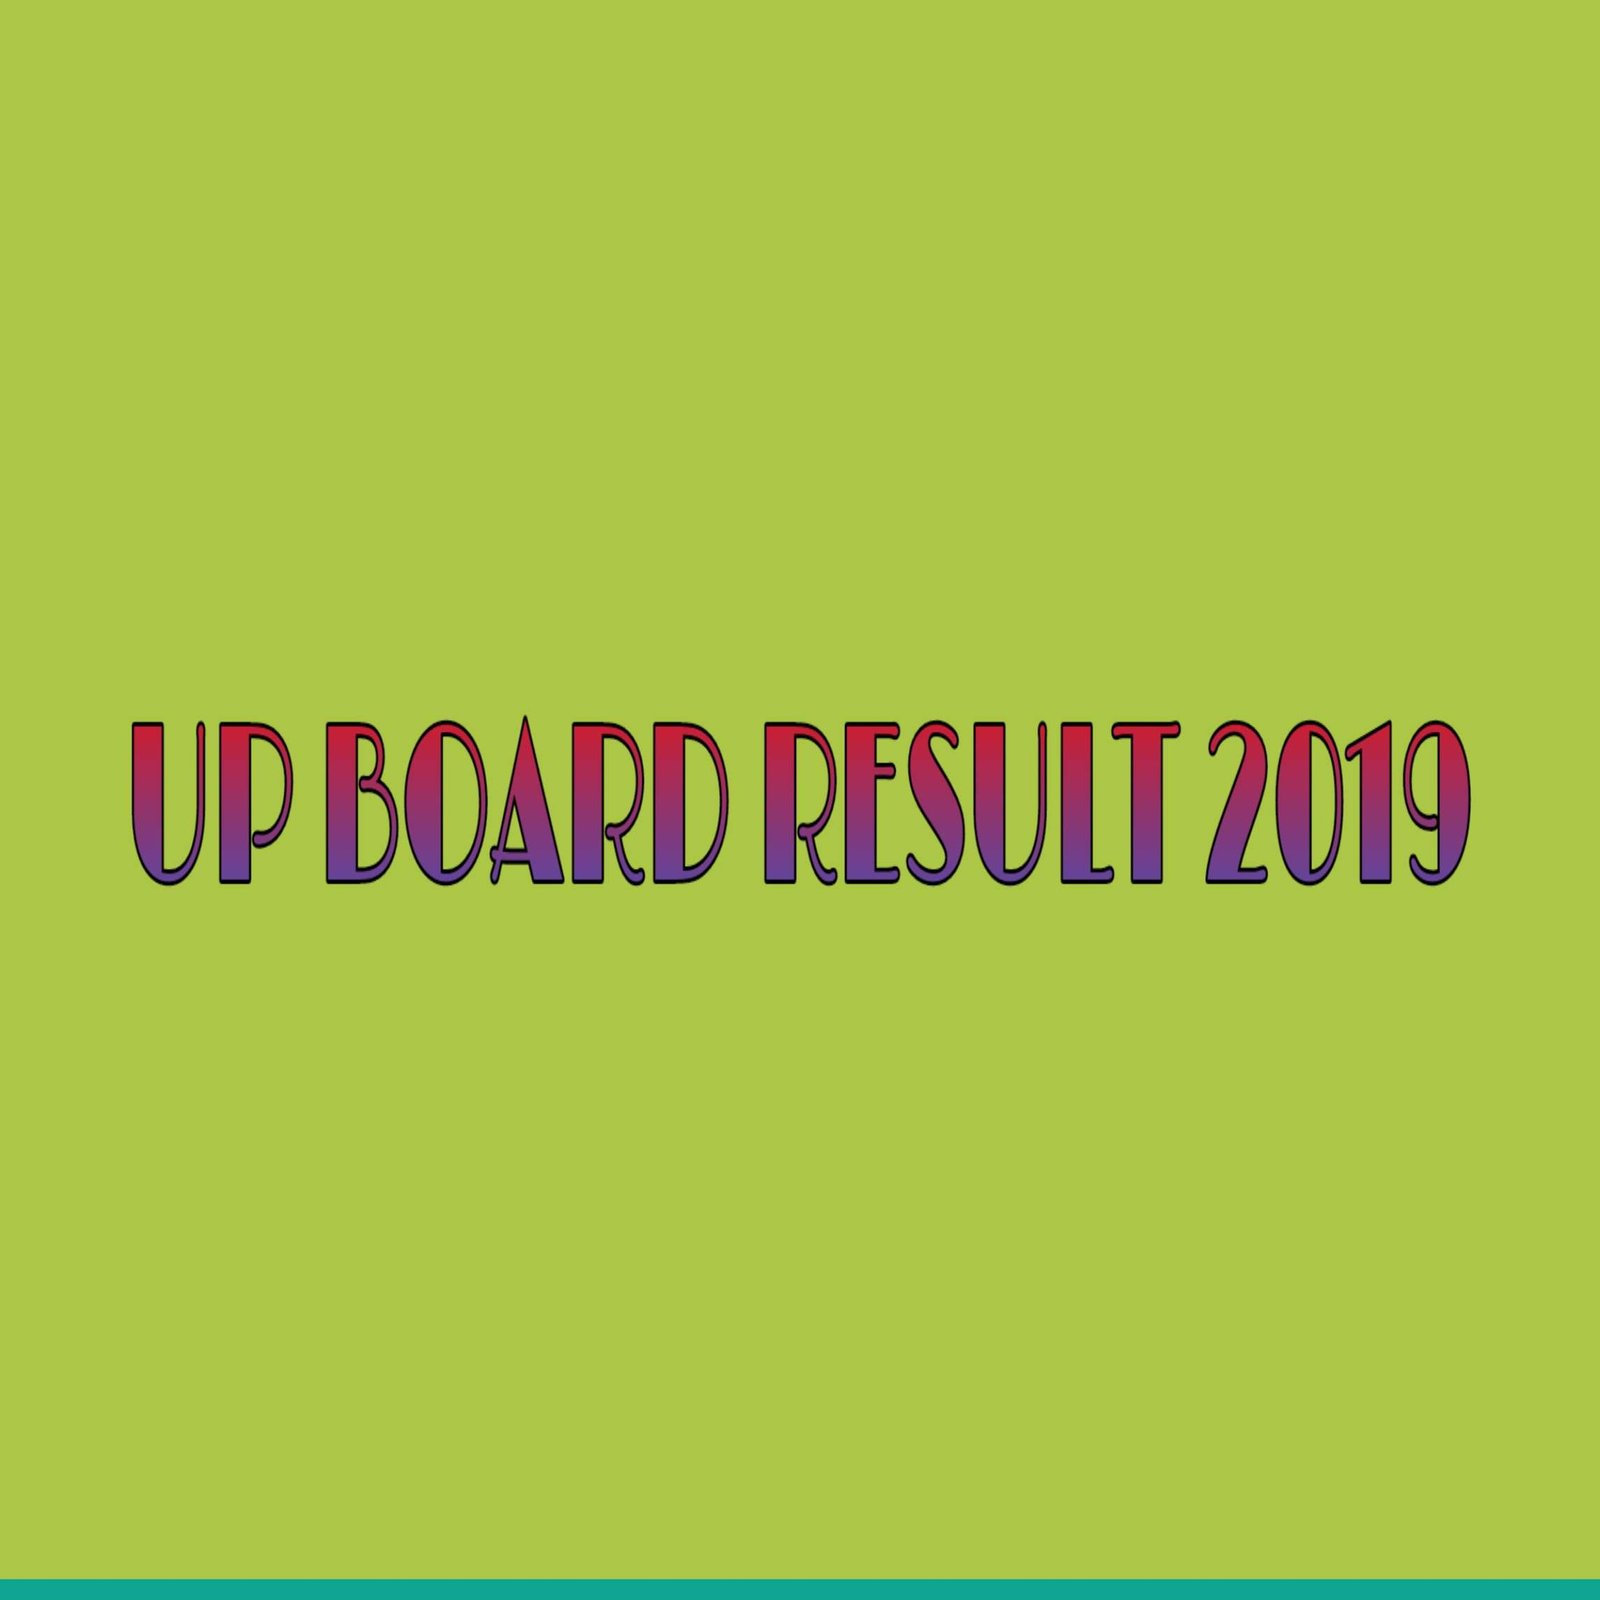 UP BOARD RESULT 2019